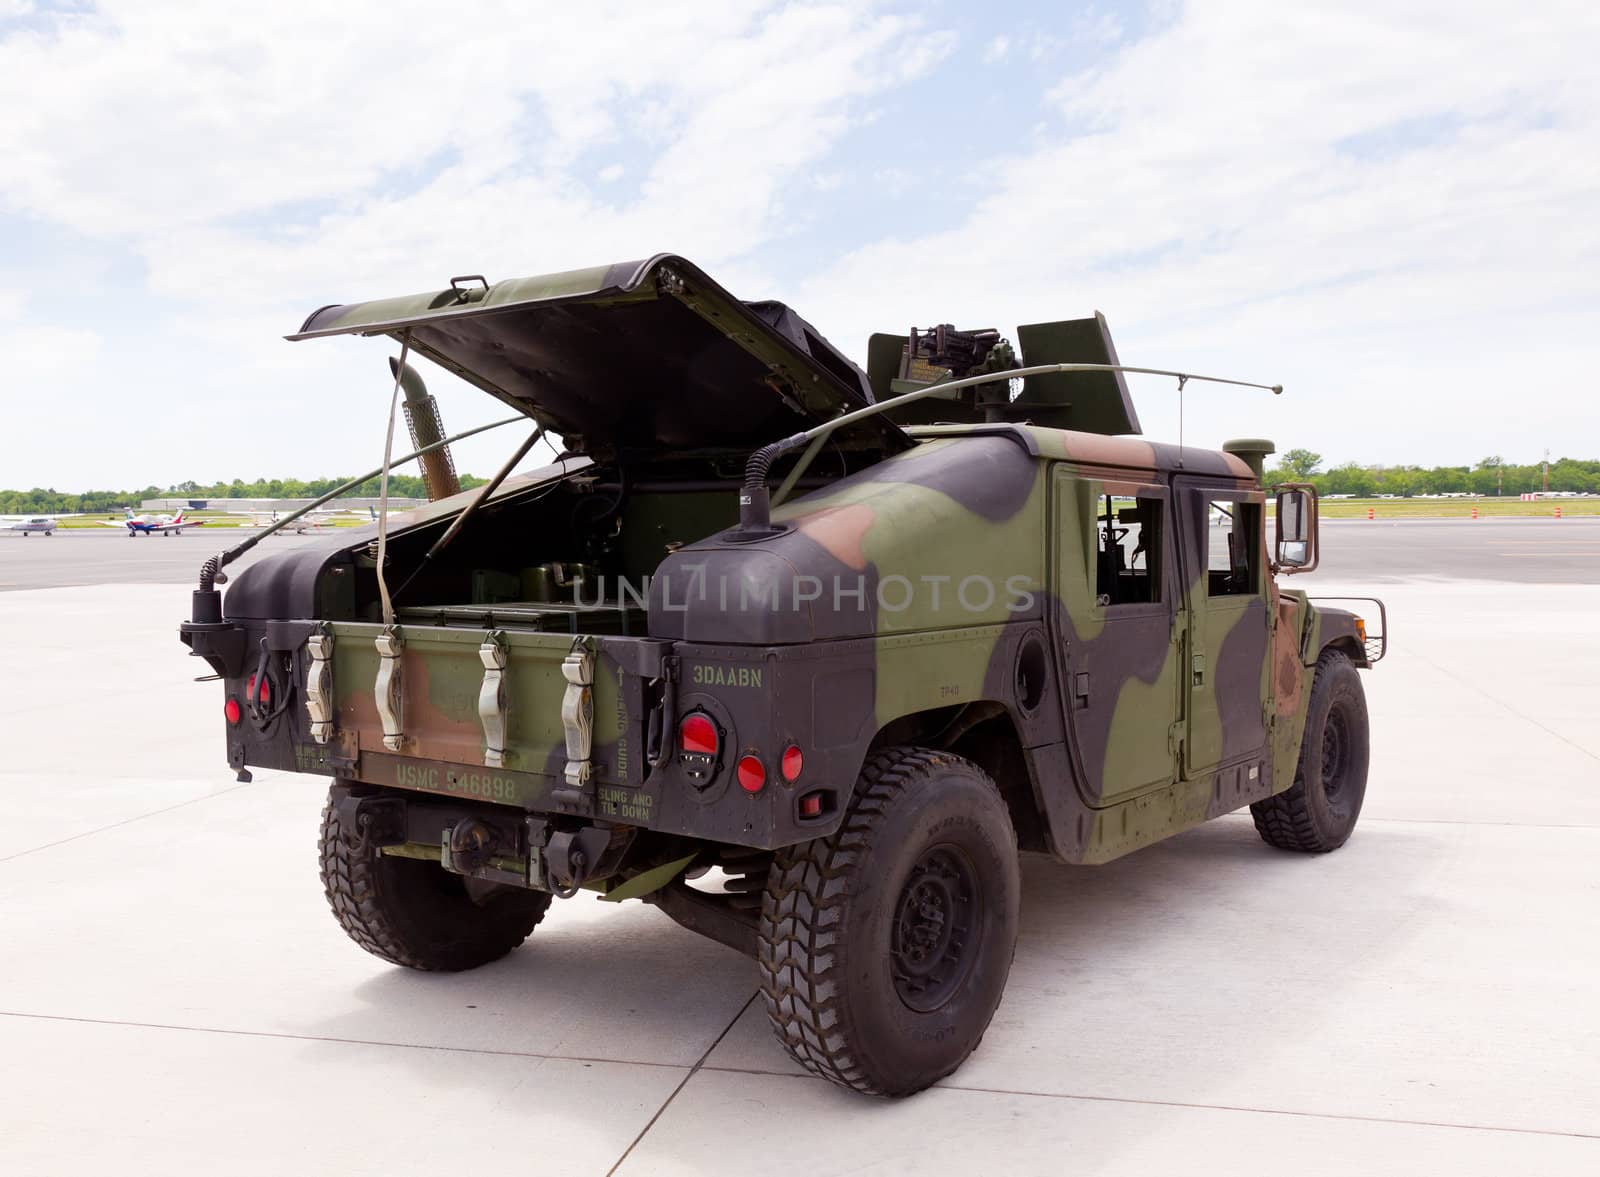 Camouflaged humvee truck at Manassas Air Show